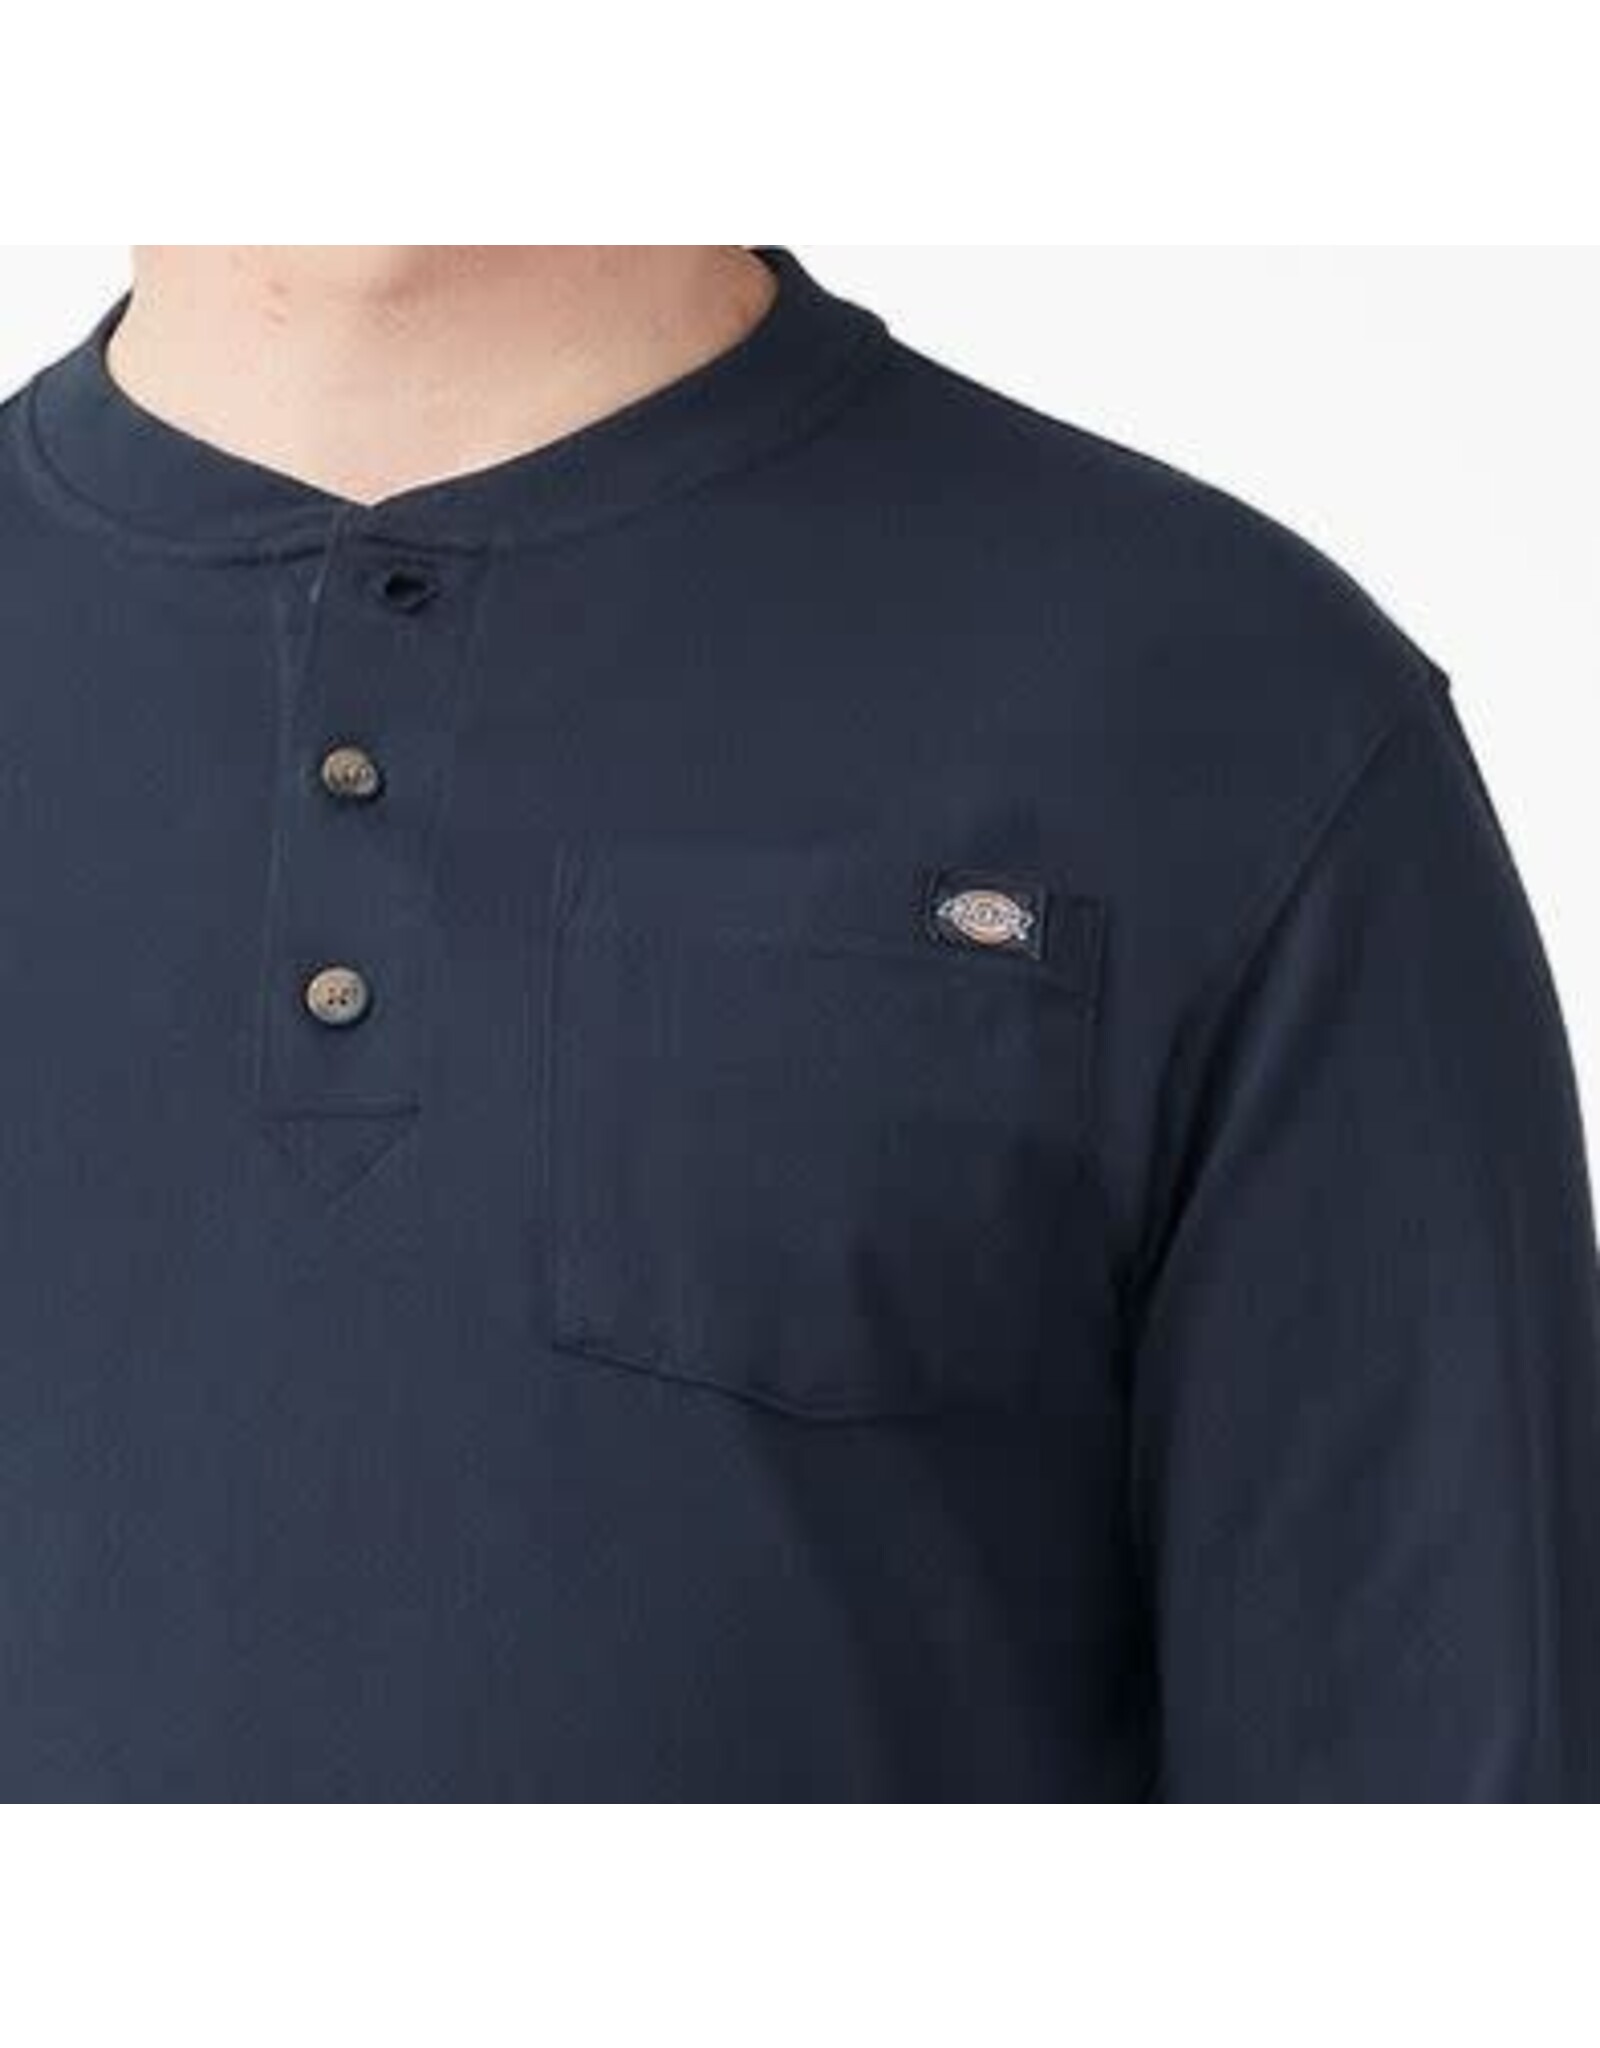 DICKIES Heavyweight Long Sleeve HenleyT-Shirt Dark Navy - WL451DN